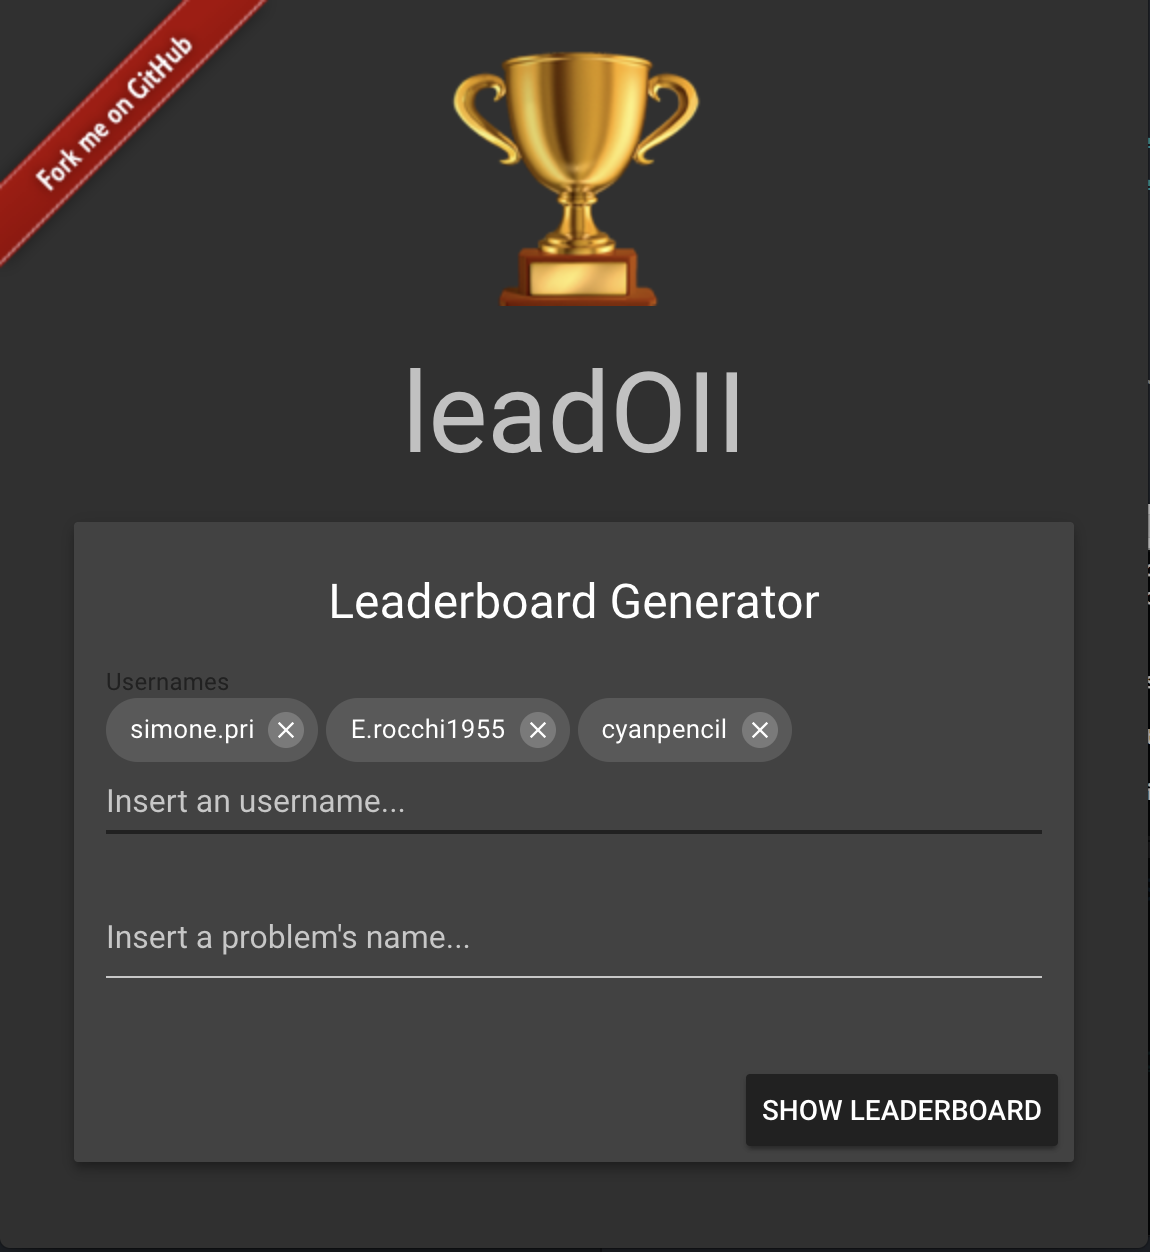 Leaderboard Generator for the Italian Olympiads of Informatics Training Platform